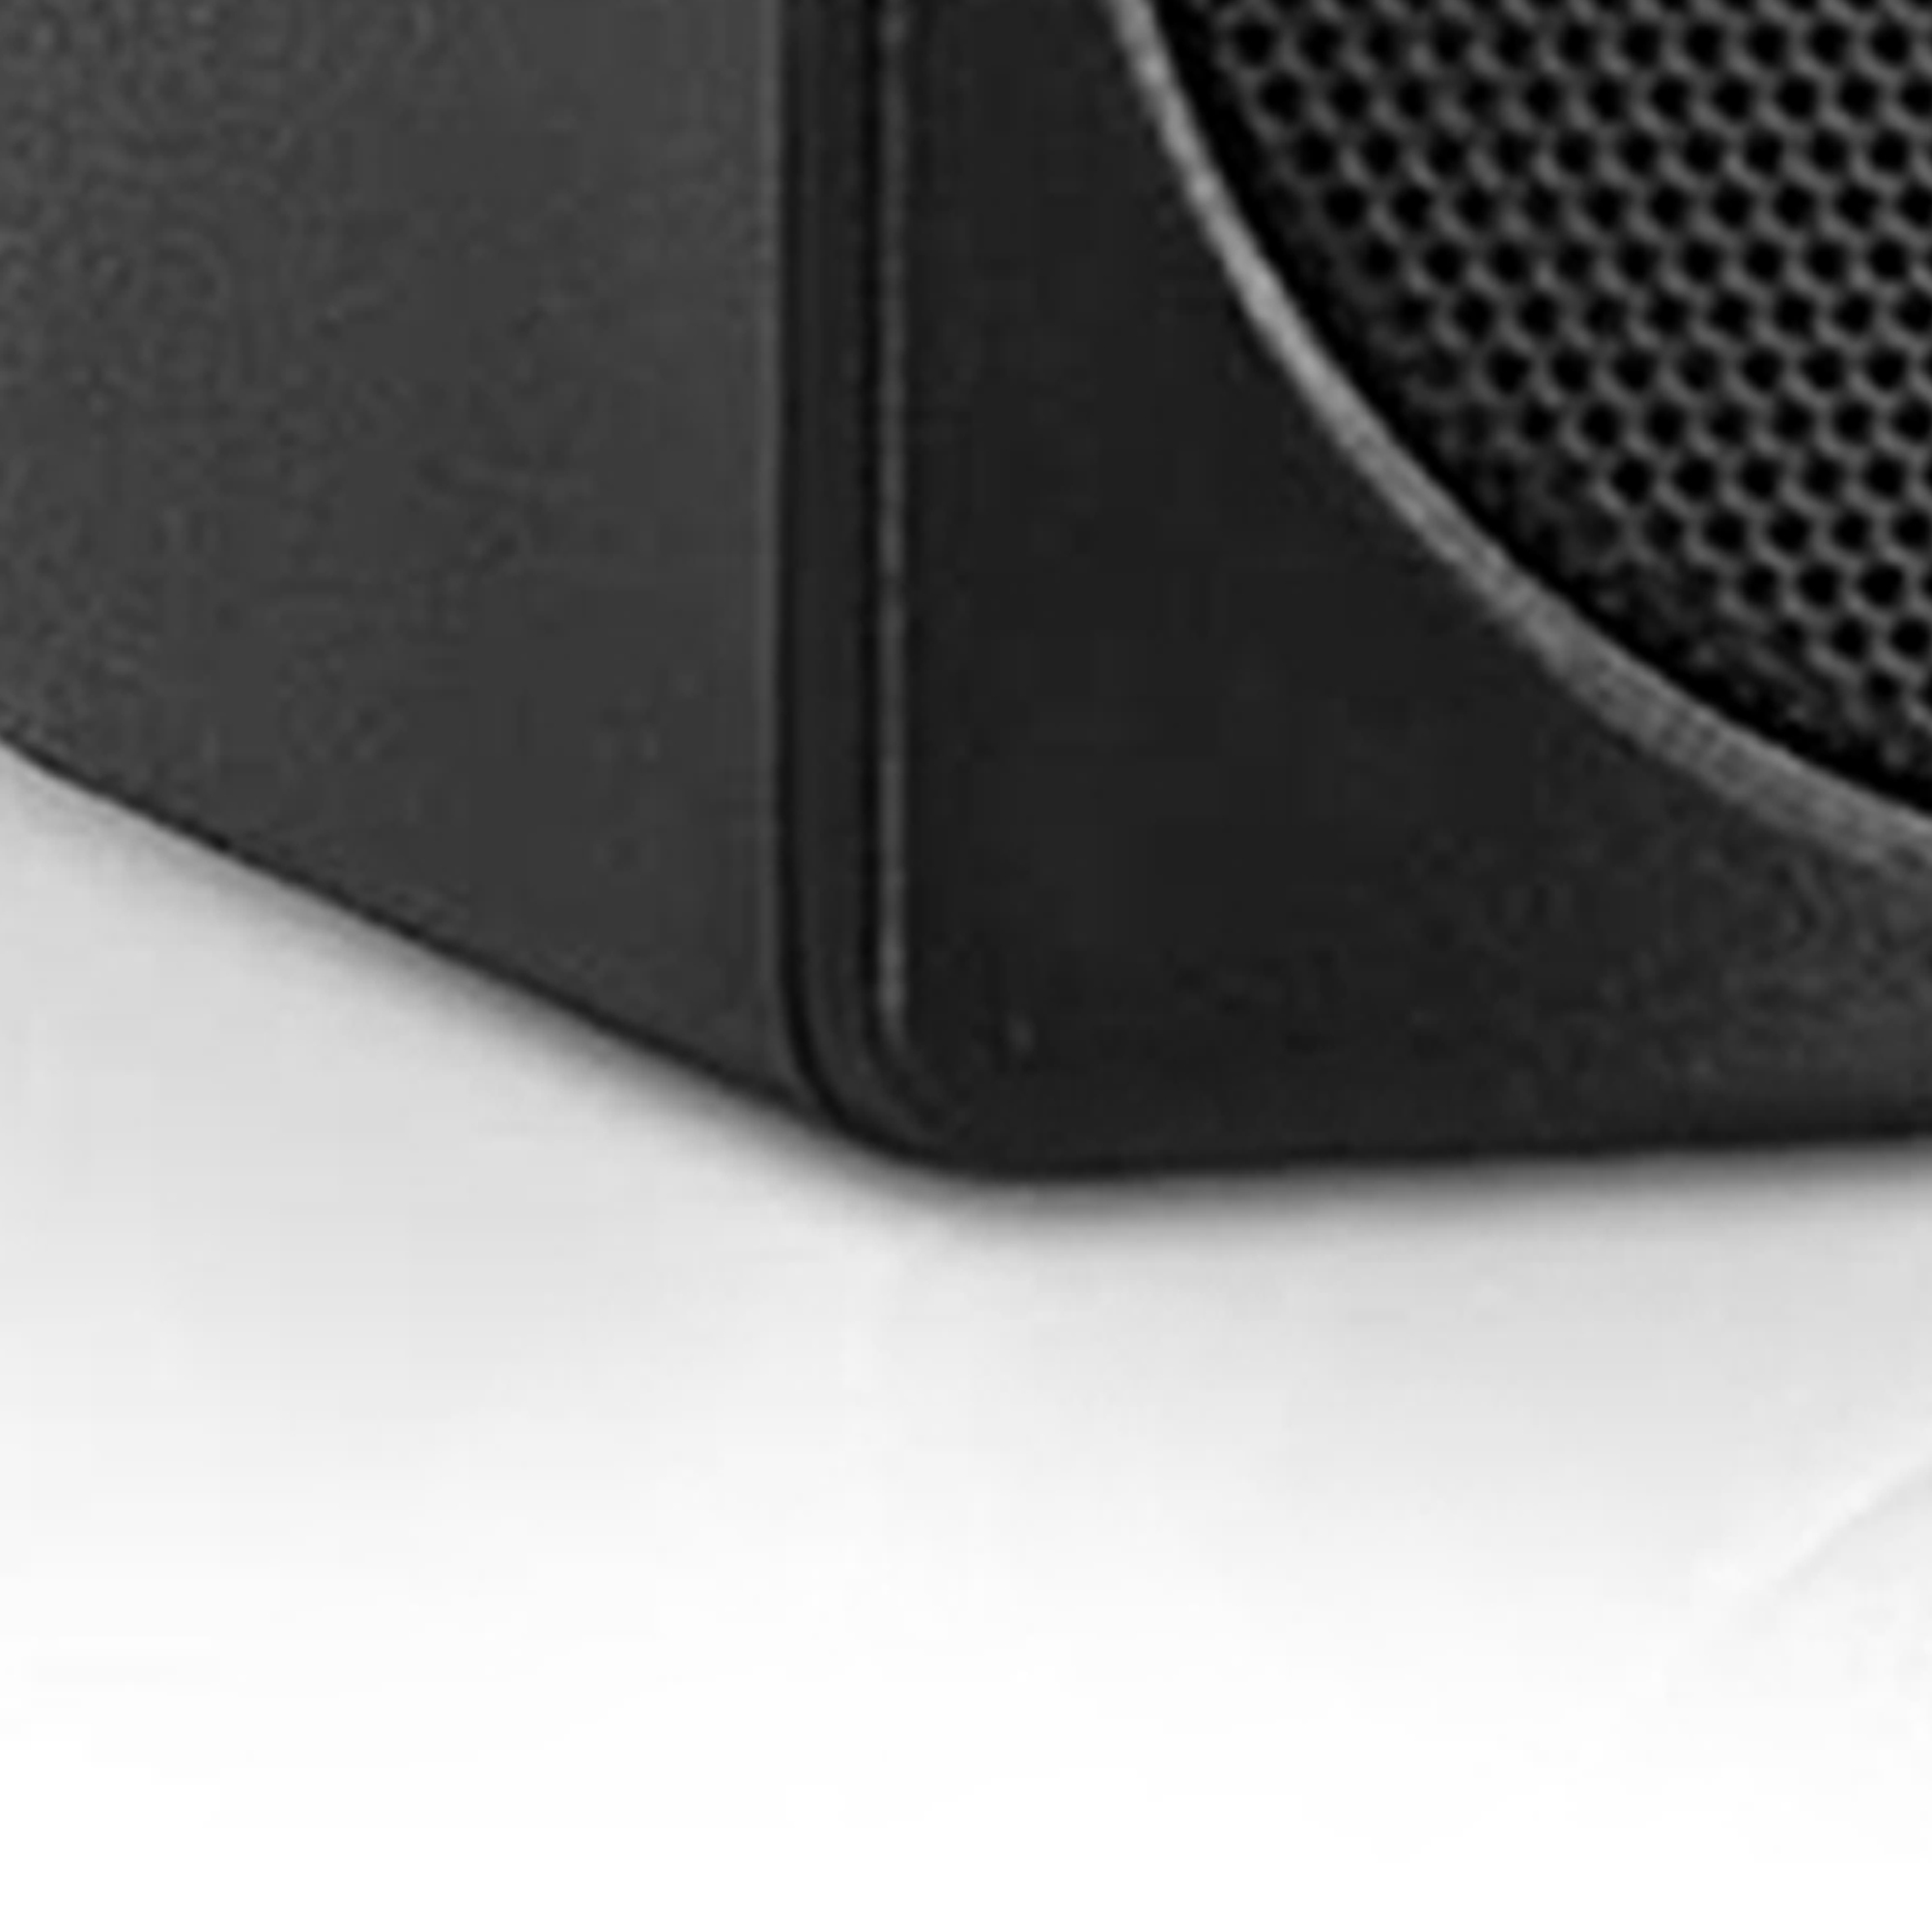 Pyle PCB3BK 3 Inch 100W Mini Cube Bookshelf Stereo Speakers, Black (4 Speakers) - image 5 of 5